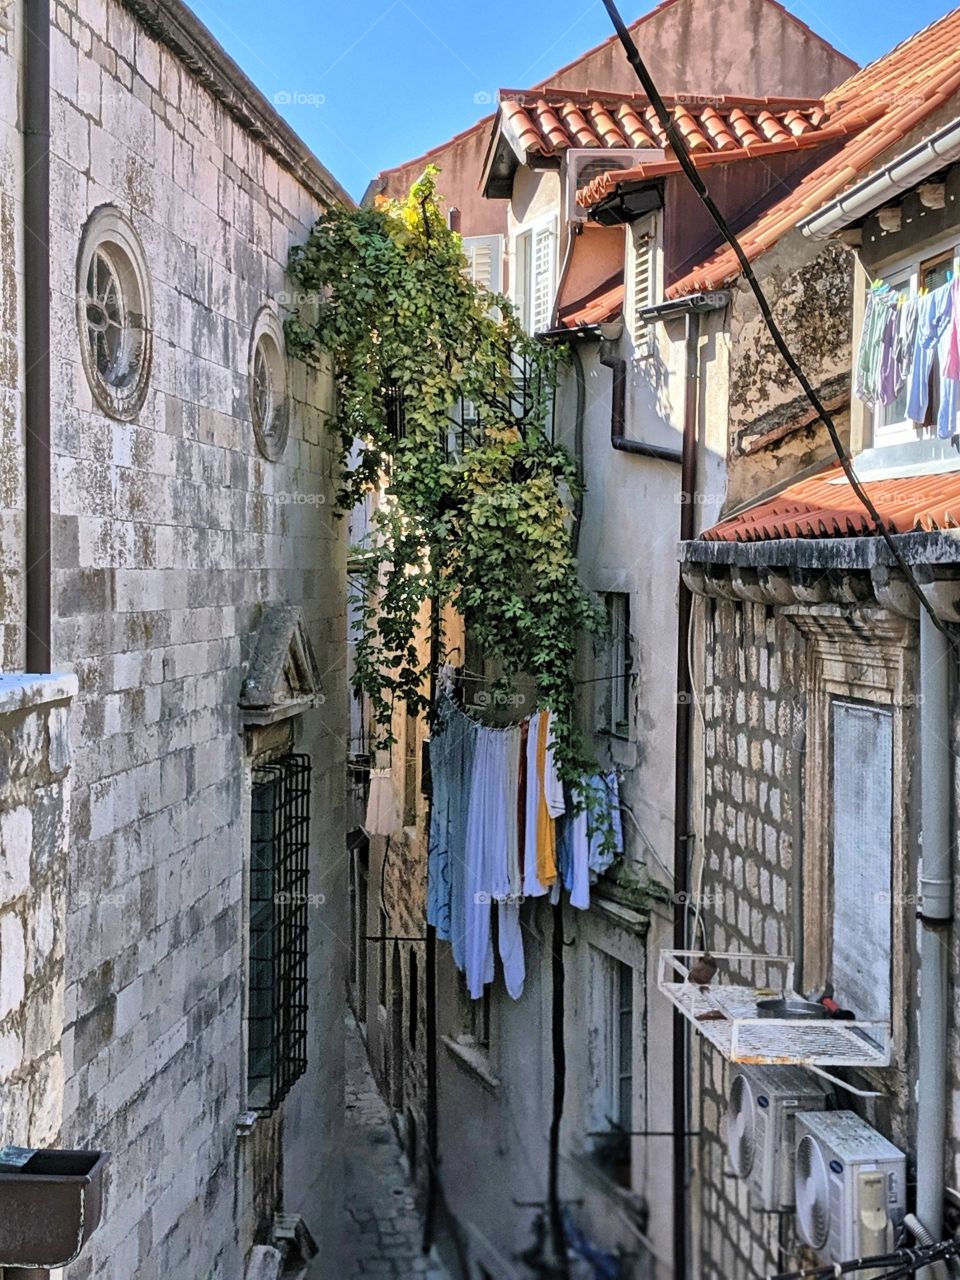 Laundry Day in Dubrovnik